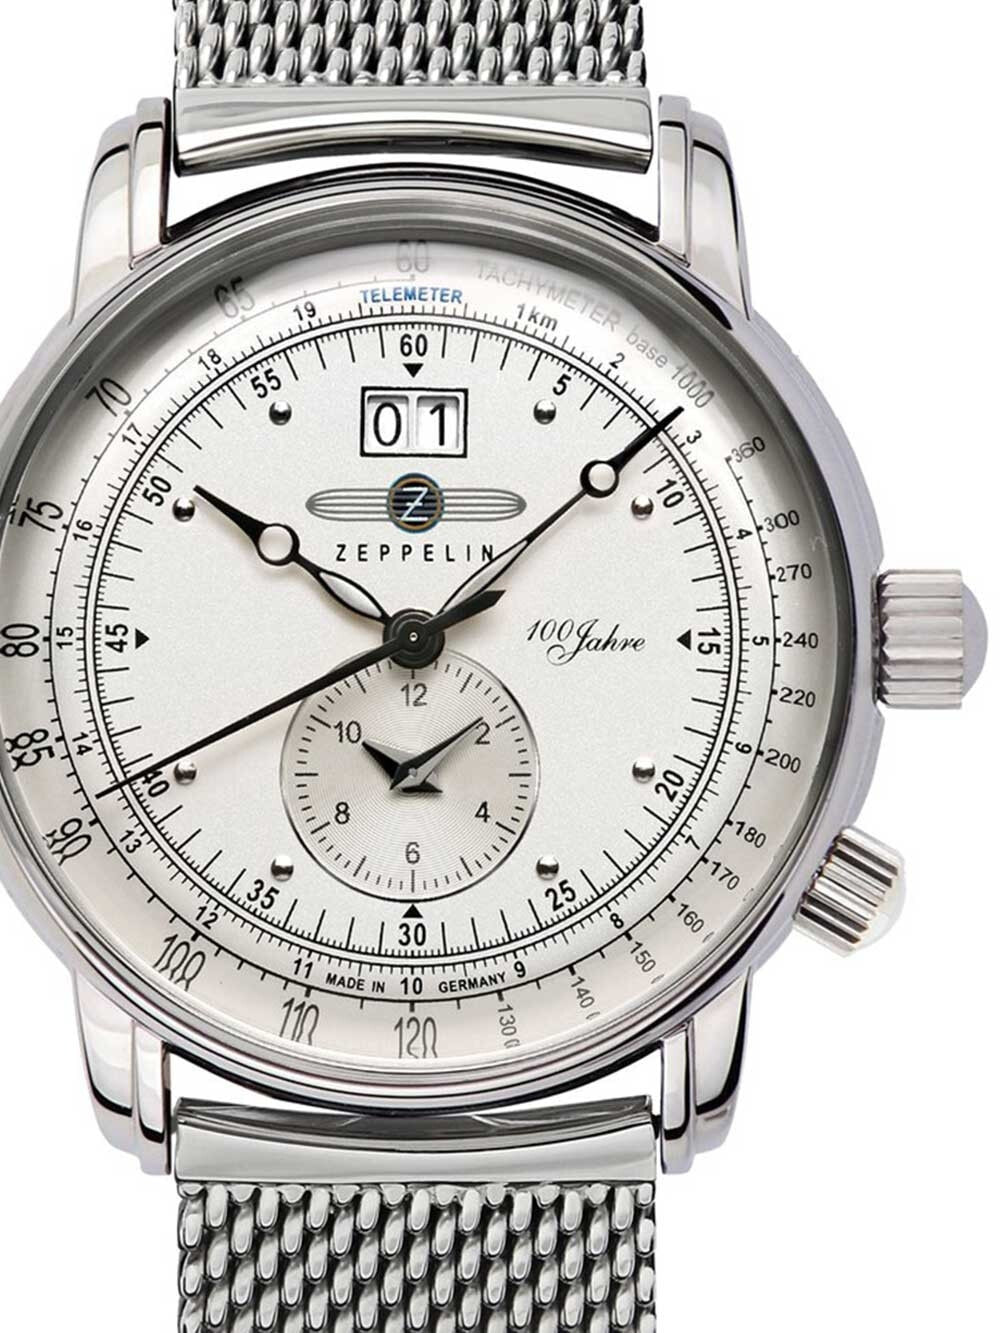 Мужские наручные часы с серебряным браслетом Zeppelin 7640M-1 100 years Zeppelin Mens 43mm 5 ATM